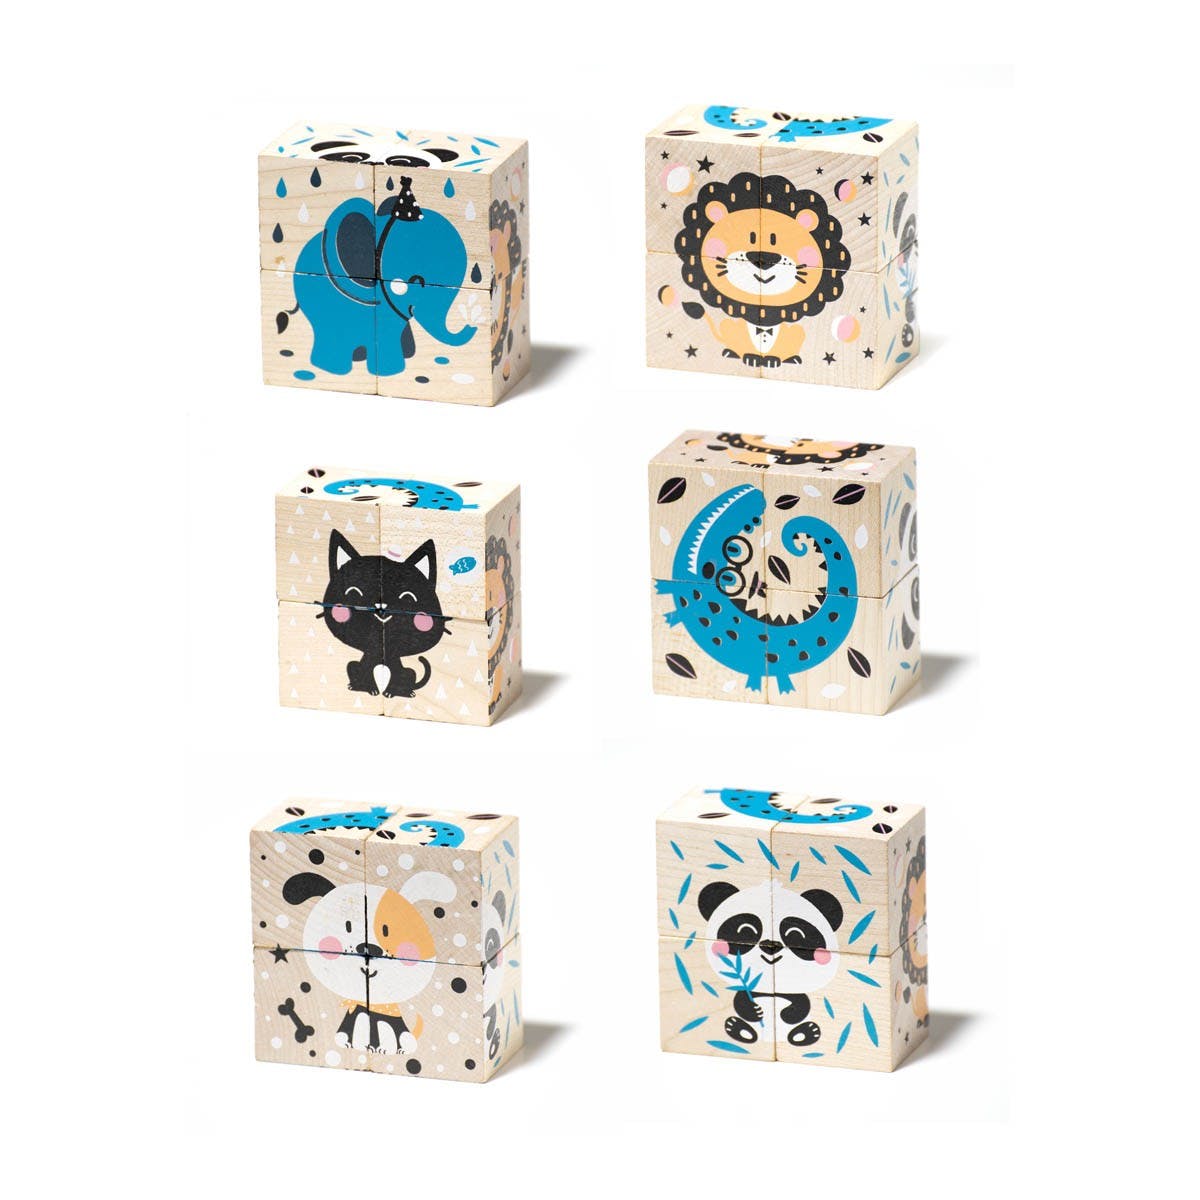 Cubika - Set of wooden blocks "Animals" - Playlaan